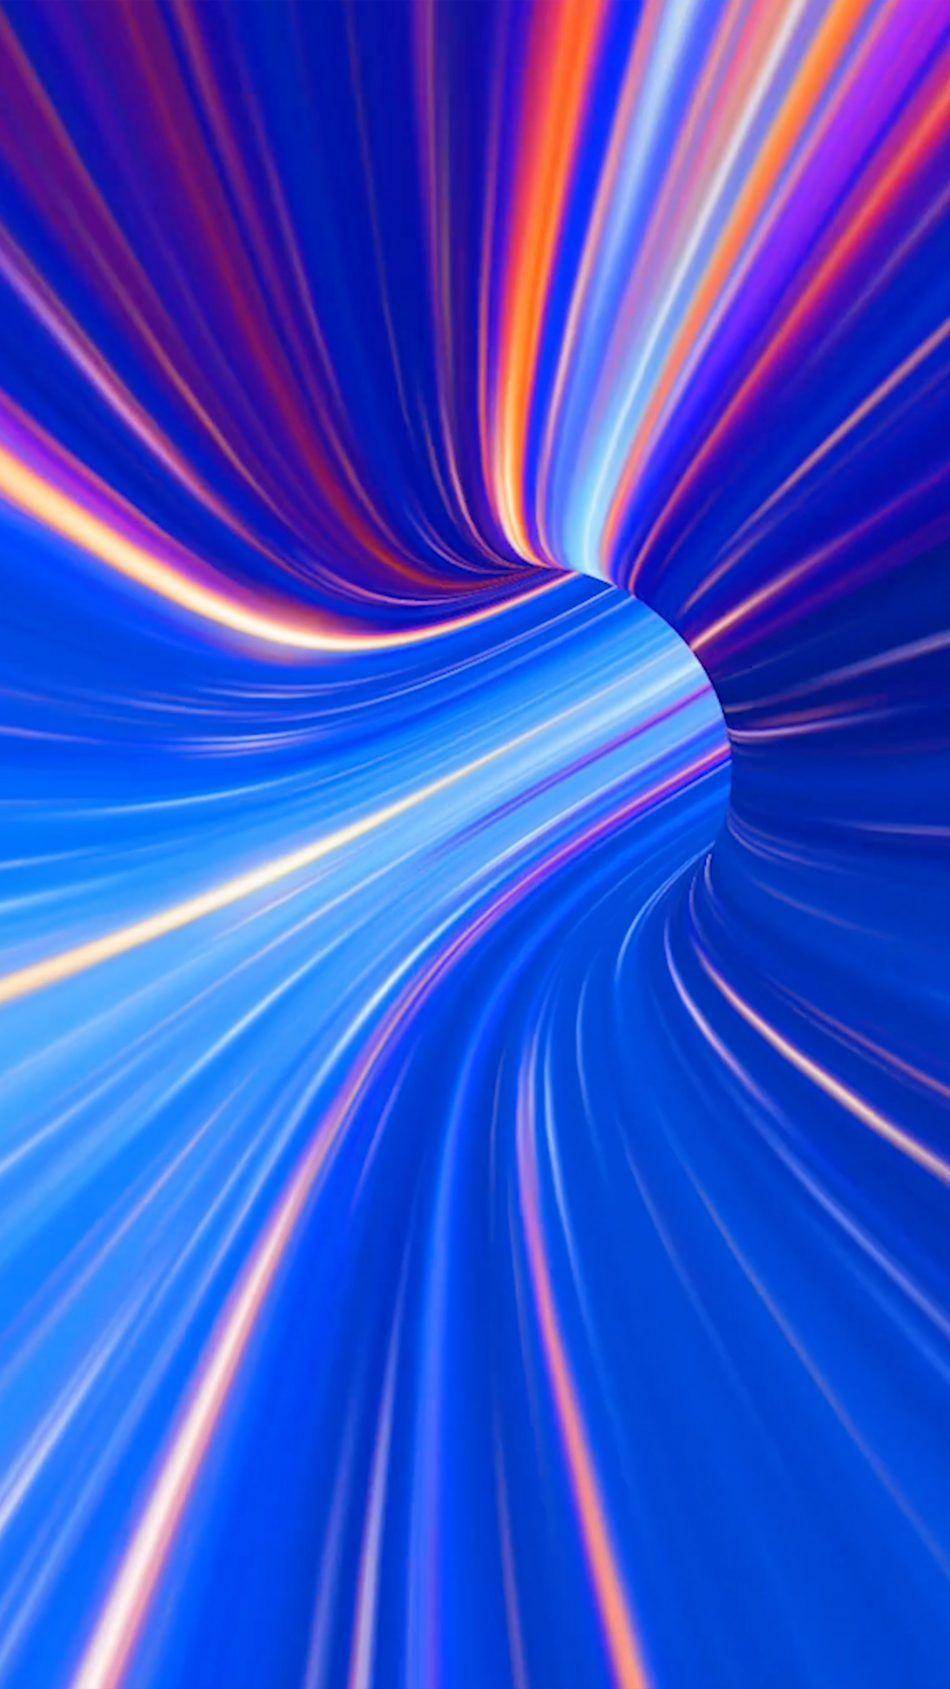 Spectrum Colorful Waves Tunnel 4K Ultra HD Mobile Wallpaper. Rainbow wallpaper, Mobile wallpaper, iPhone wallpaper blur